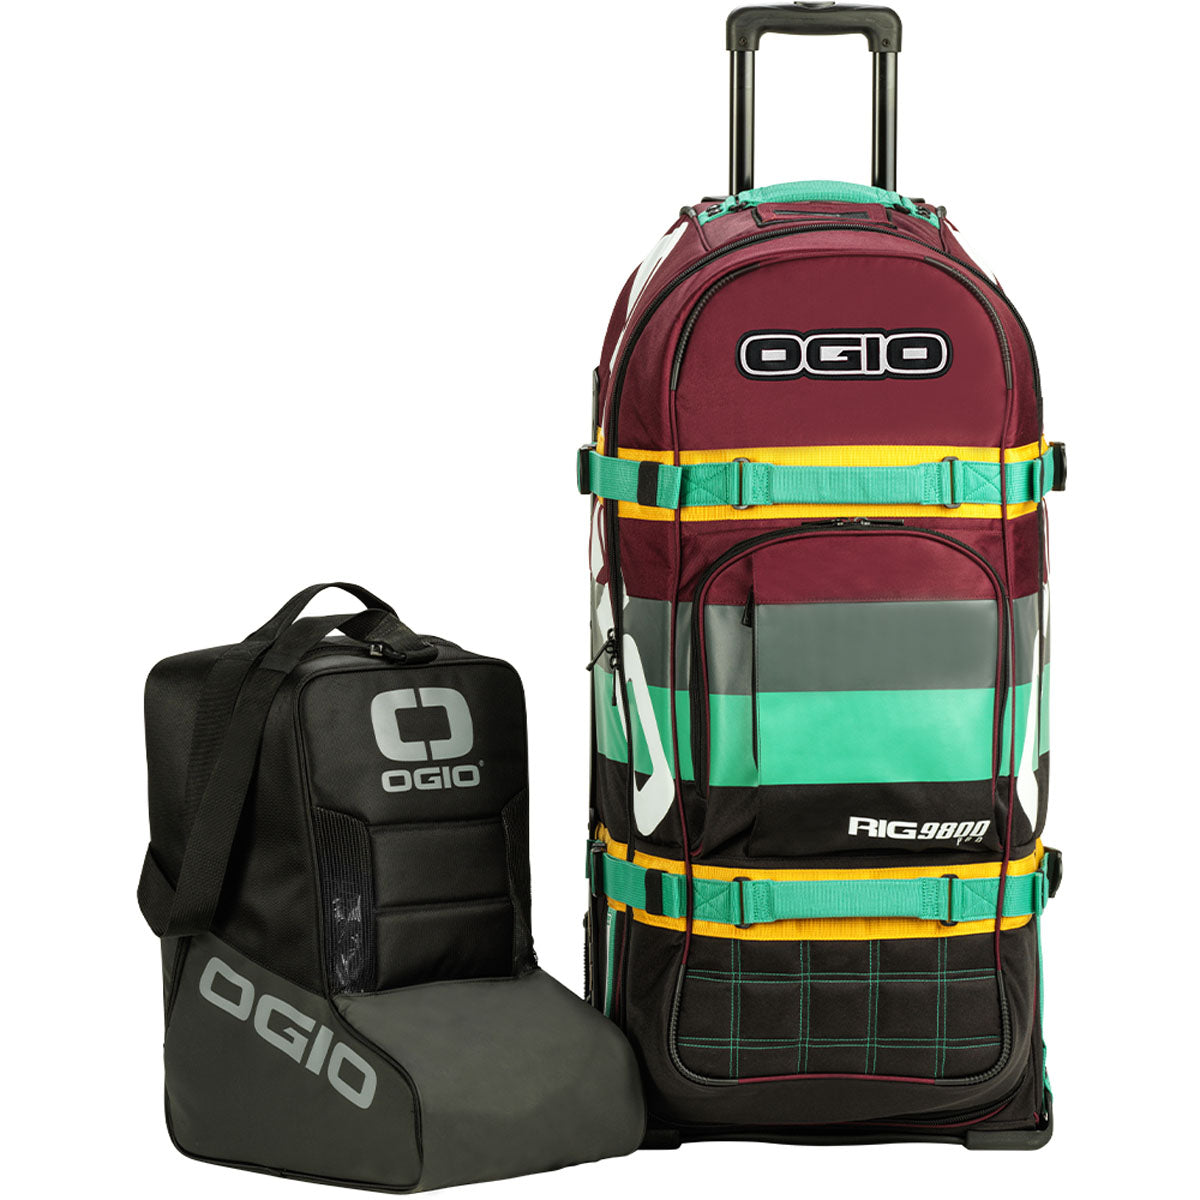 Ogio Rig 9800 Pro Gear Bag - Block Party - ExtremeSupply.com